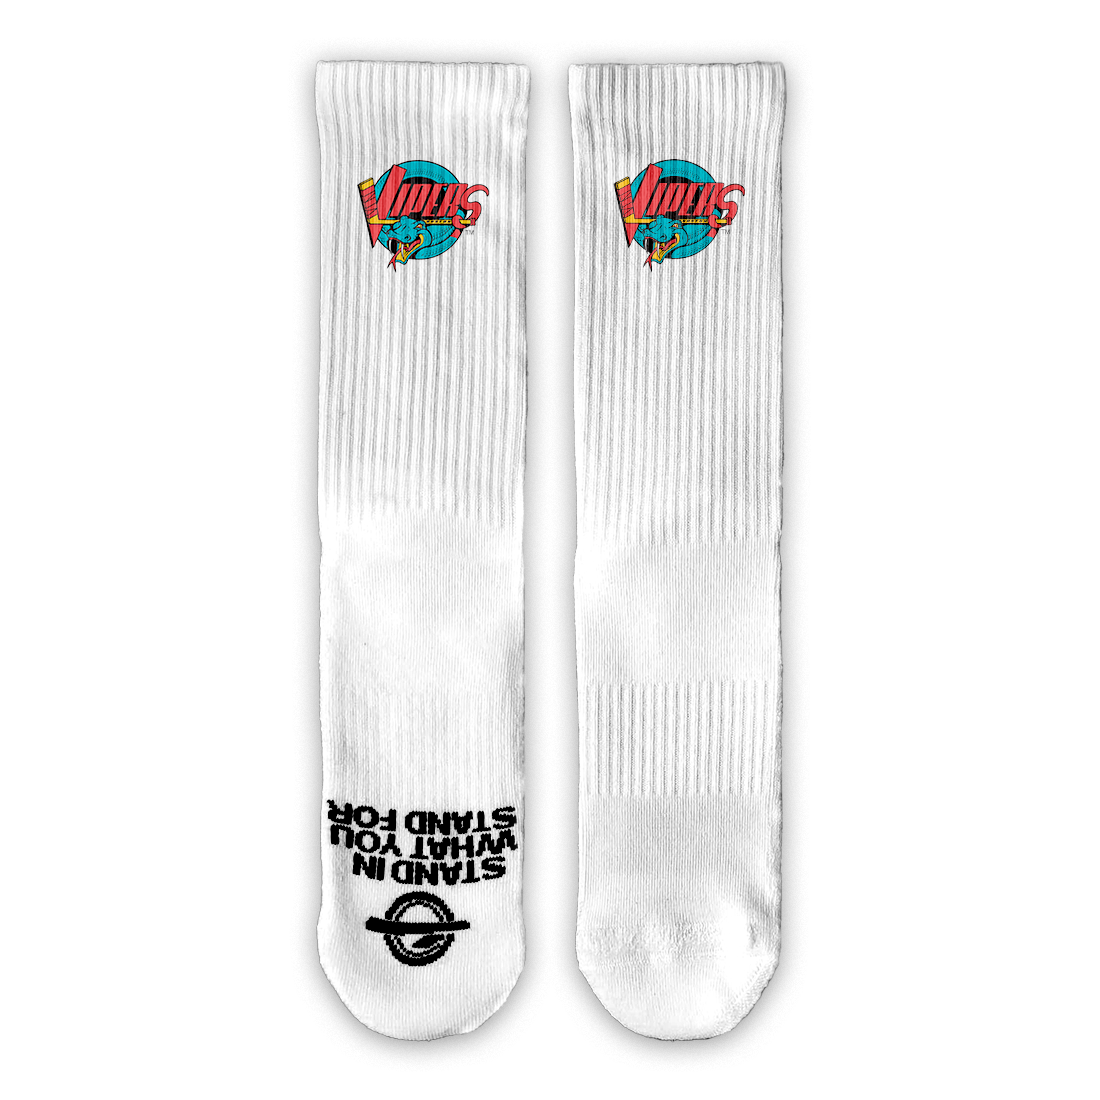 Vipers Ice Hockey Lifestyle Socks